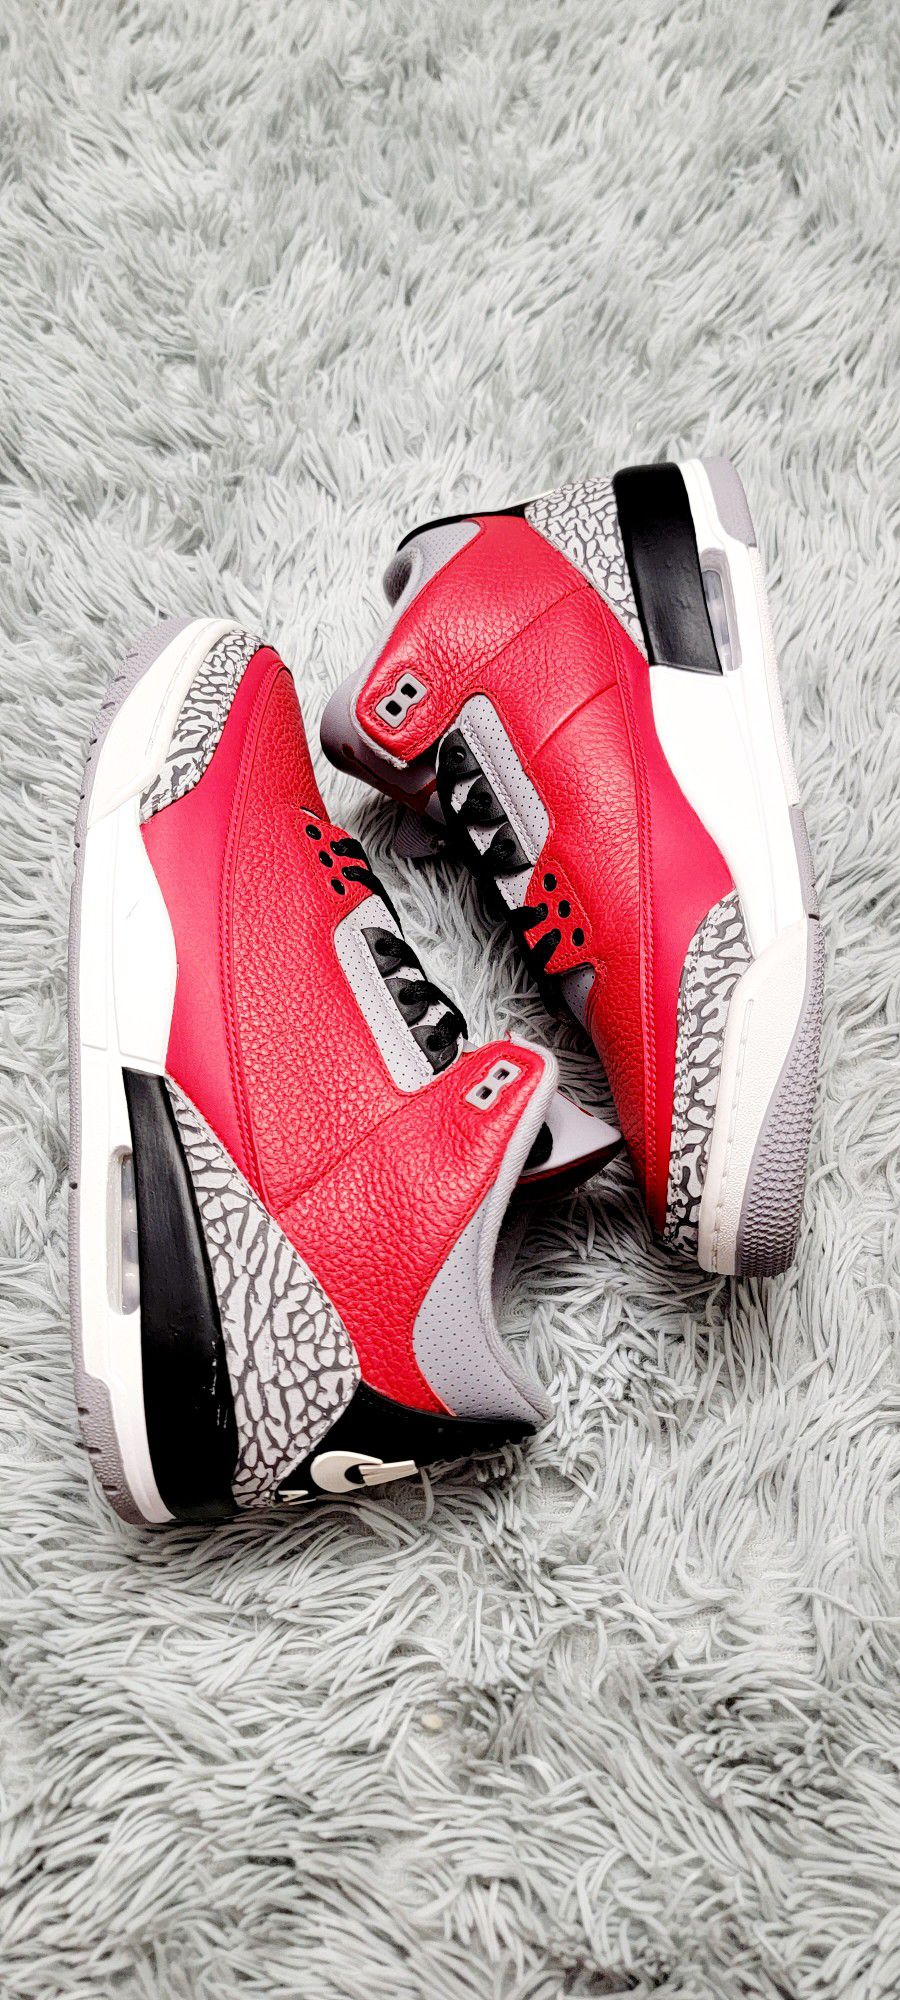 Size 13 Nike Air Jordan 3 Retro SE ‘Unite’ CK5692-600 Fire Red Cement Gray.